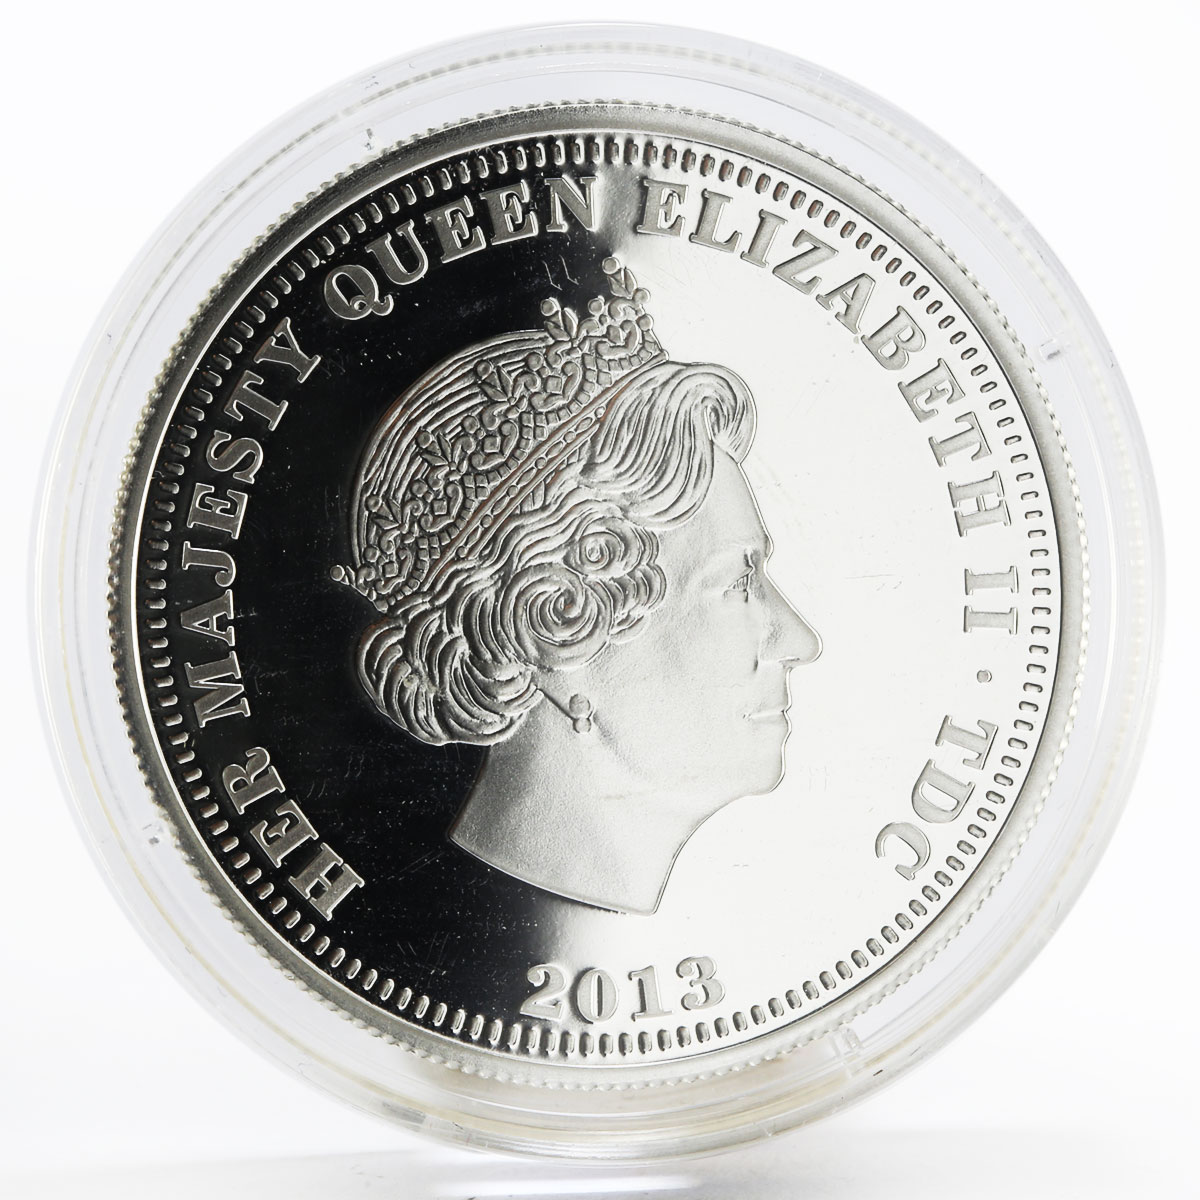 Tristan da Cunha 1 guinea The History of the Guinea William III silver coin 2013